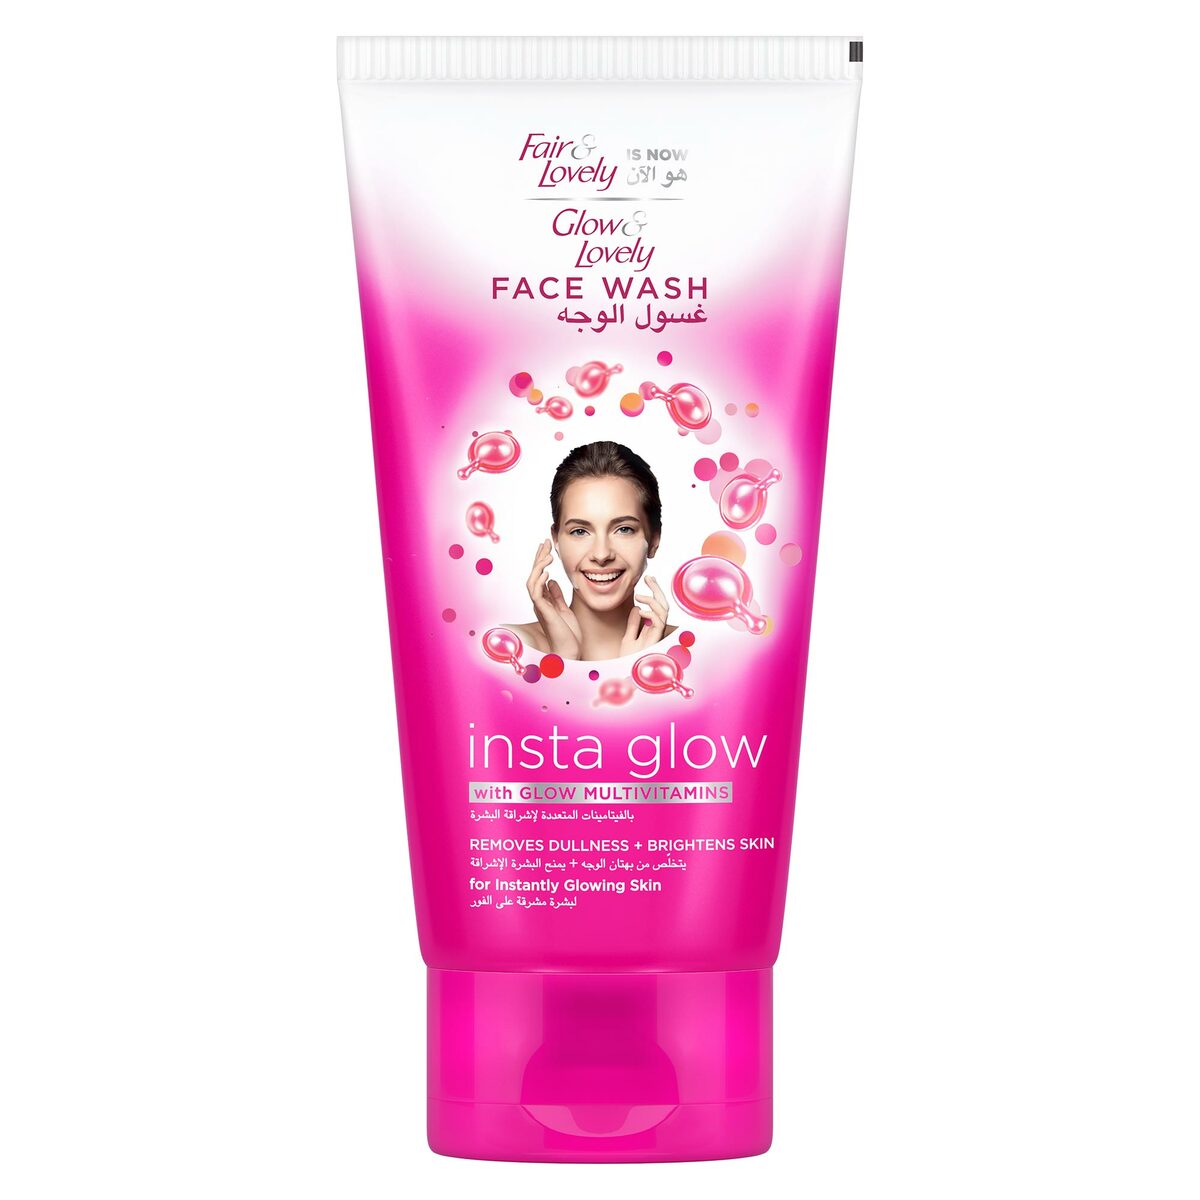 Glow & Lovely Face Wash Insta Glow 150 g